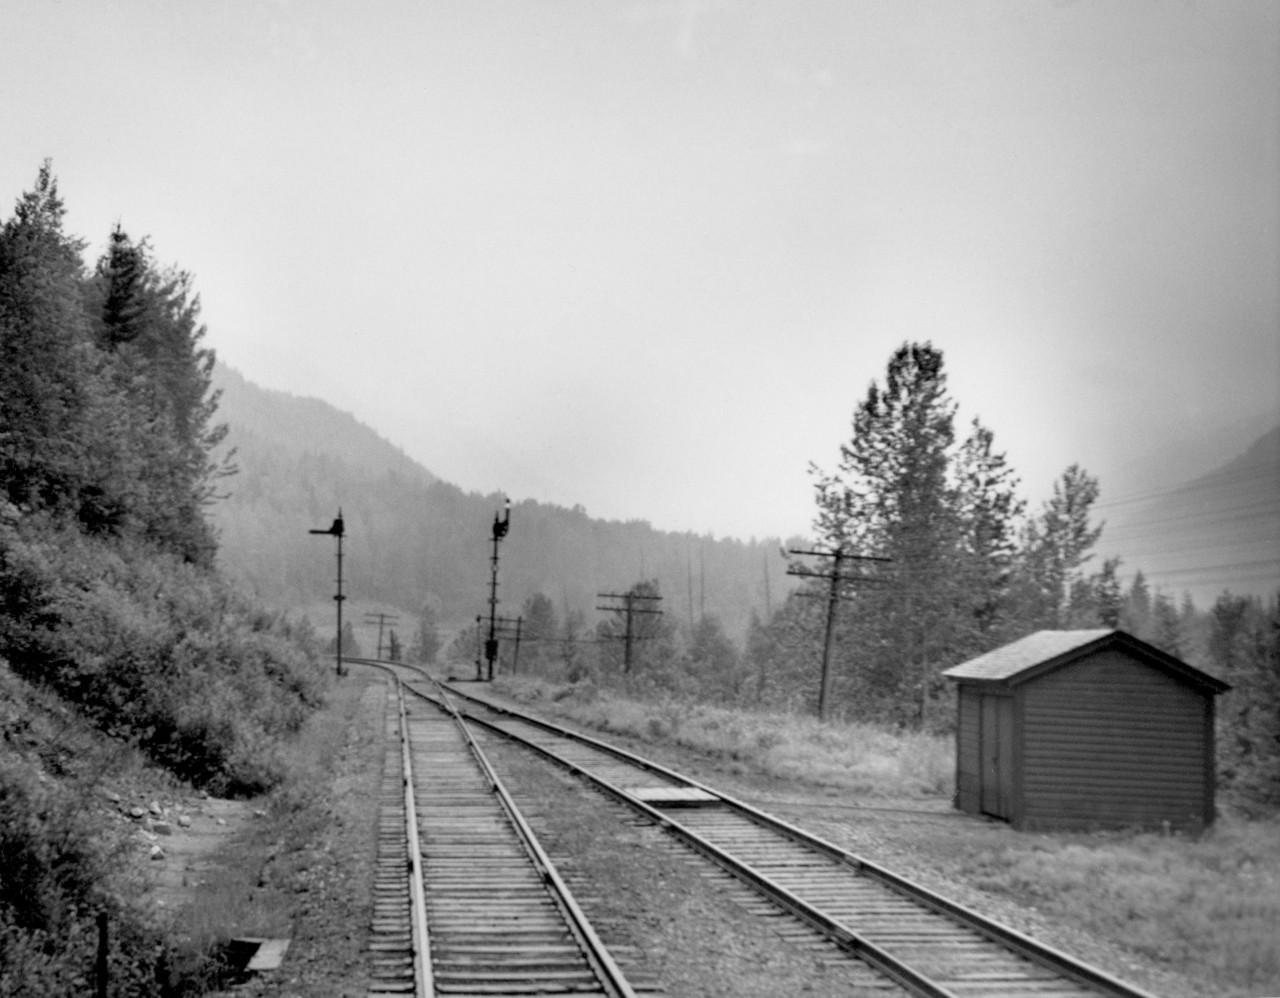 West end of Twin Butte siding, taken from rear of train no. 4